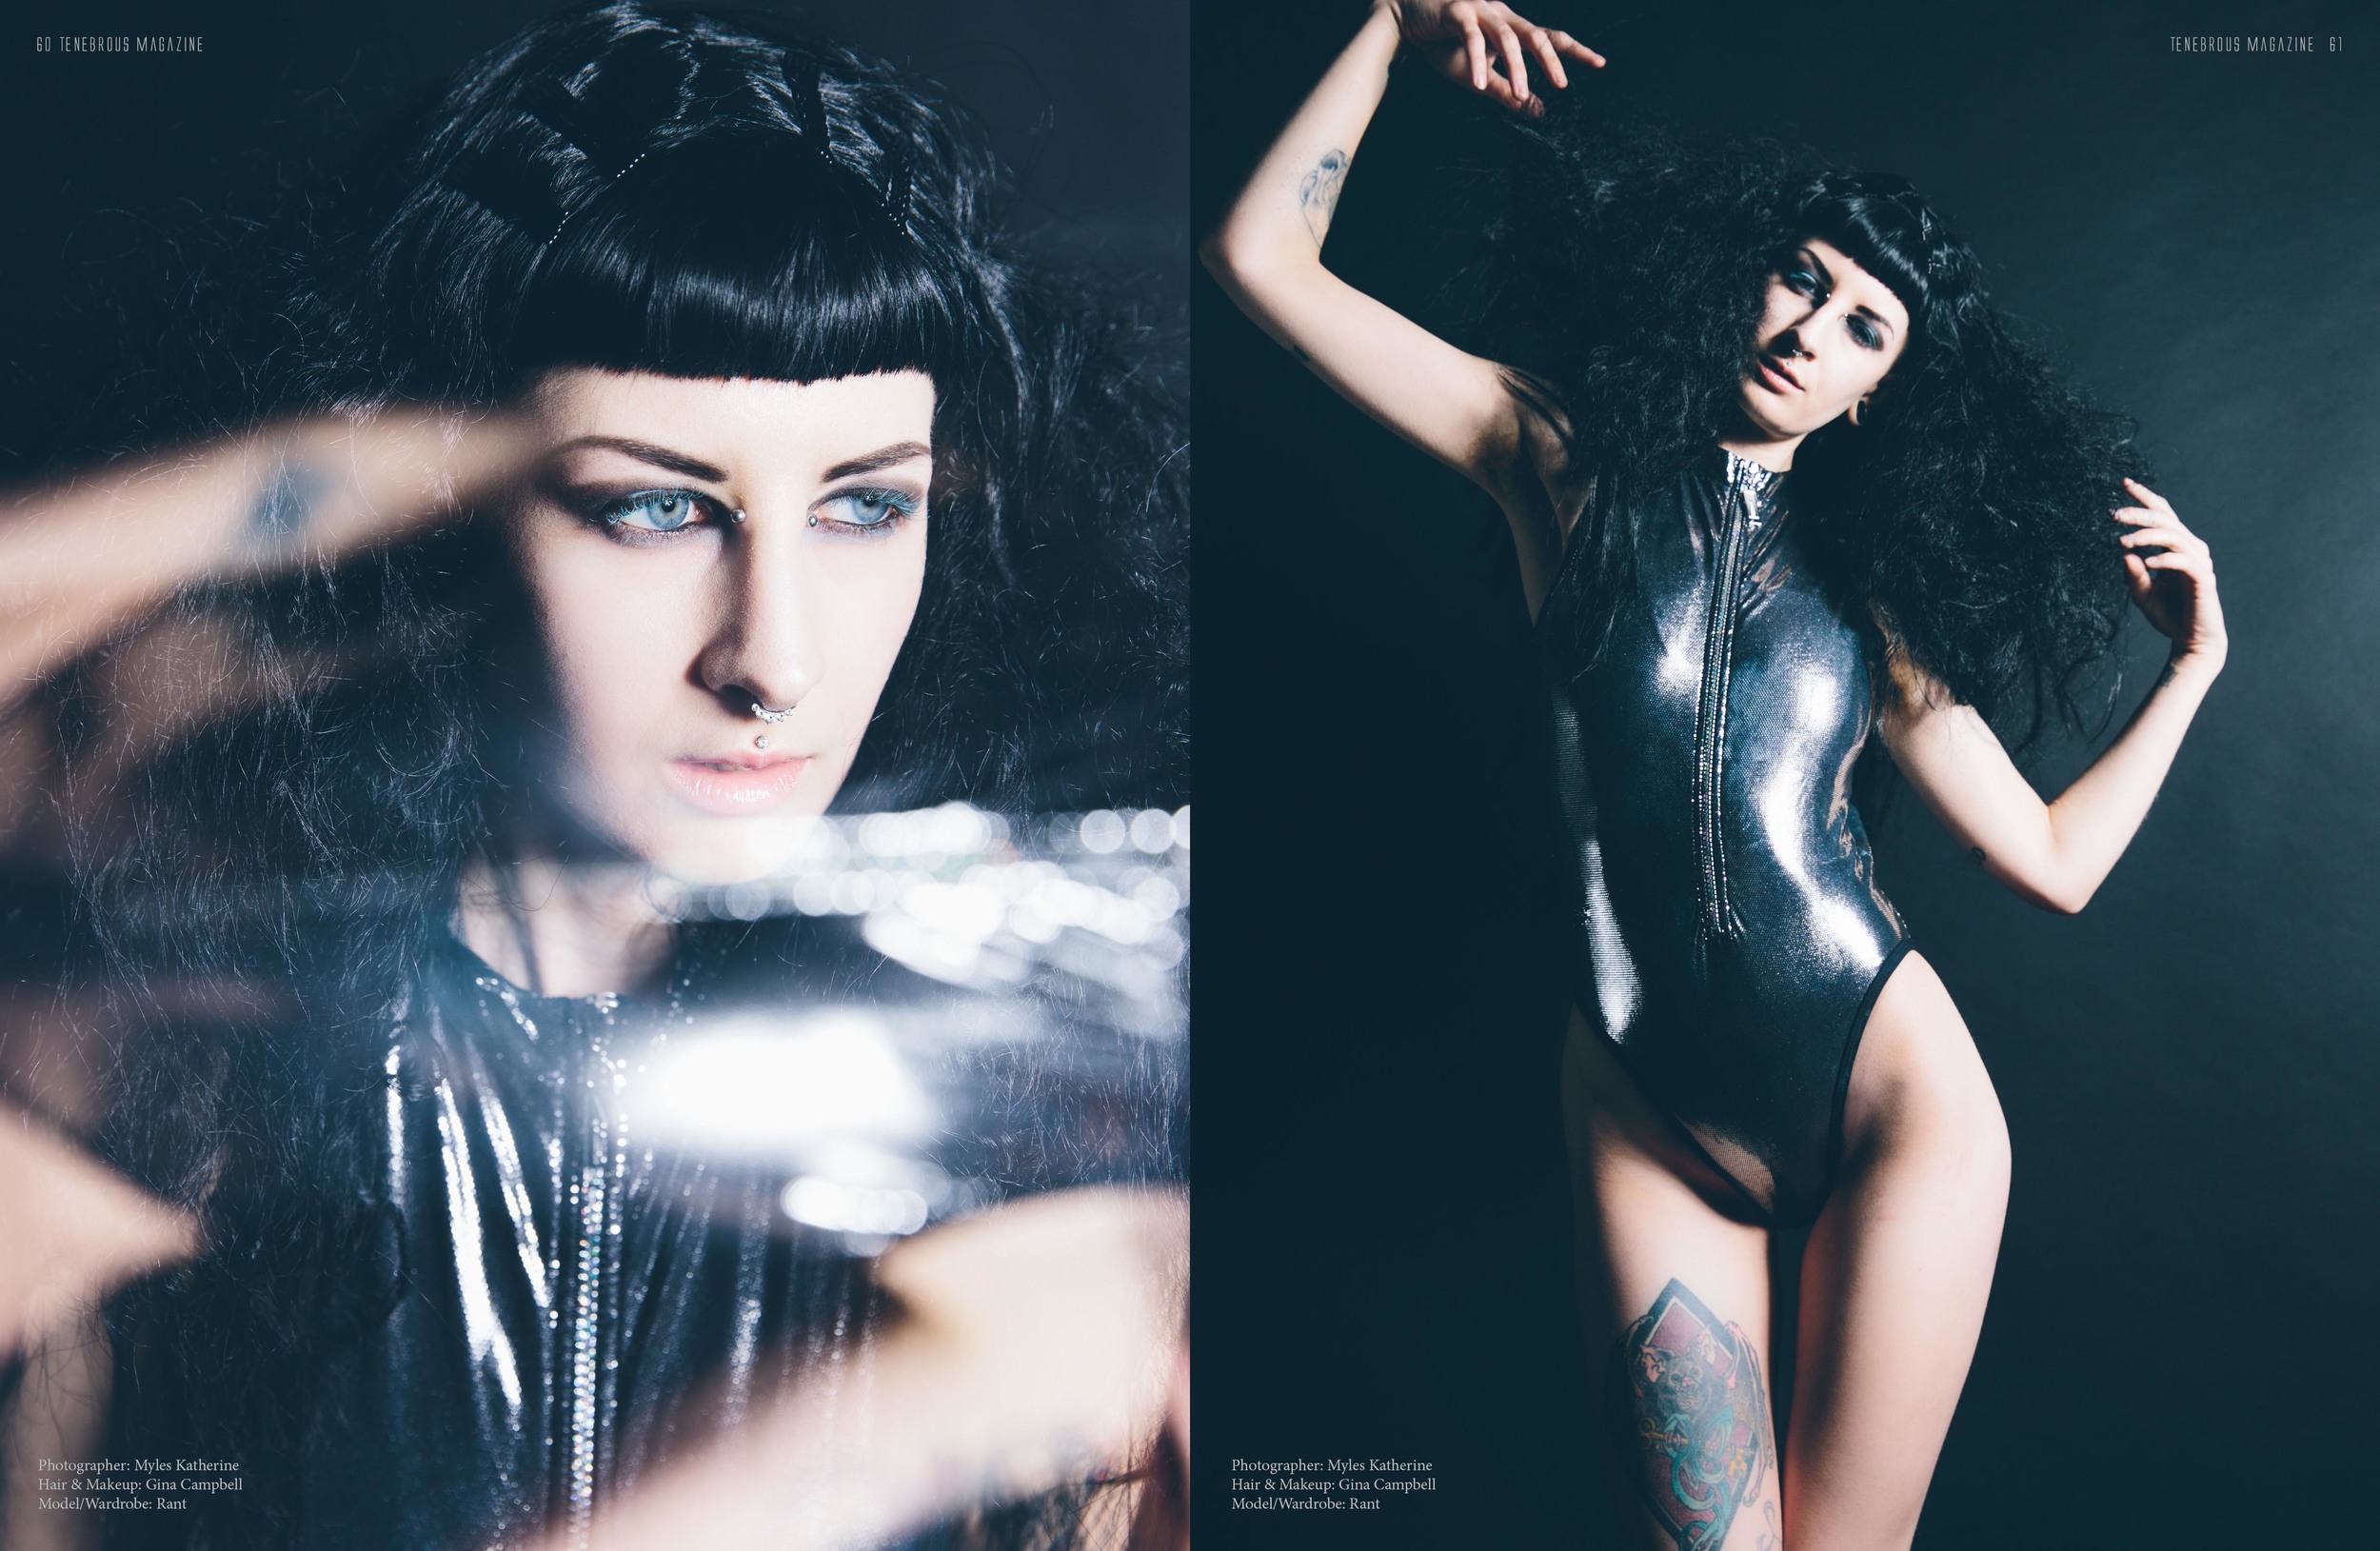  Tenebrous Magazine  Model: Rant  Photography:&nbsp;  Myles Katherine Photography   